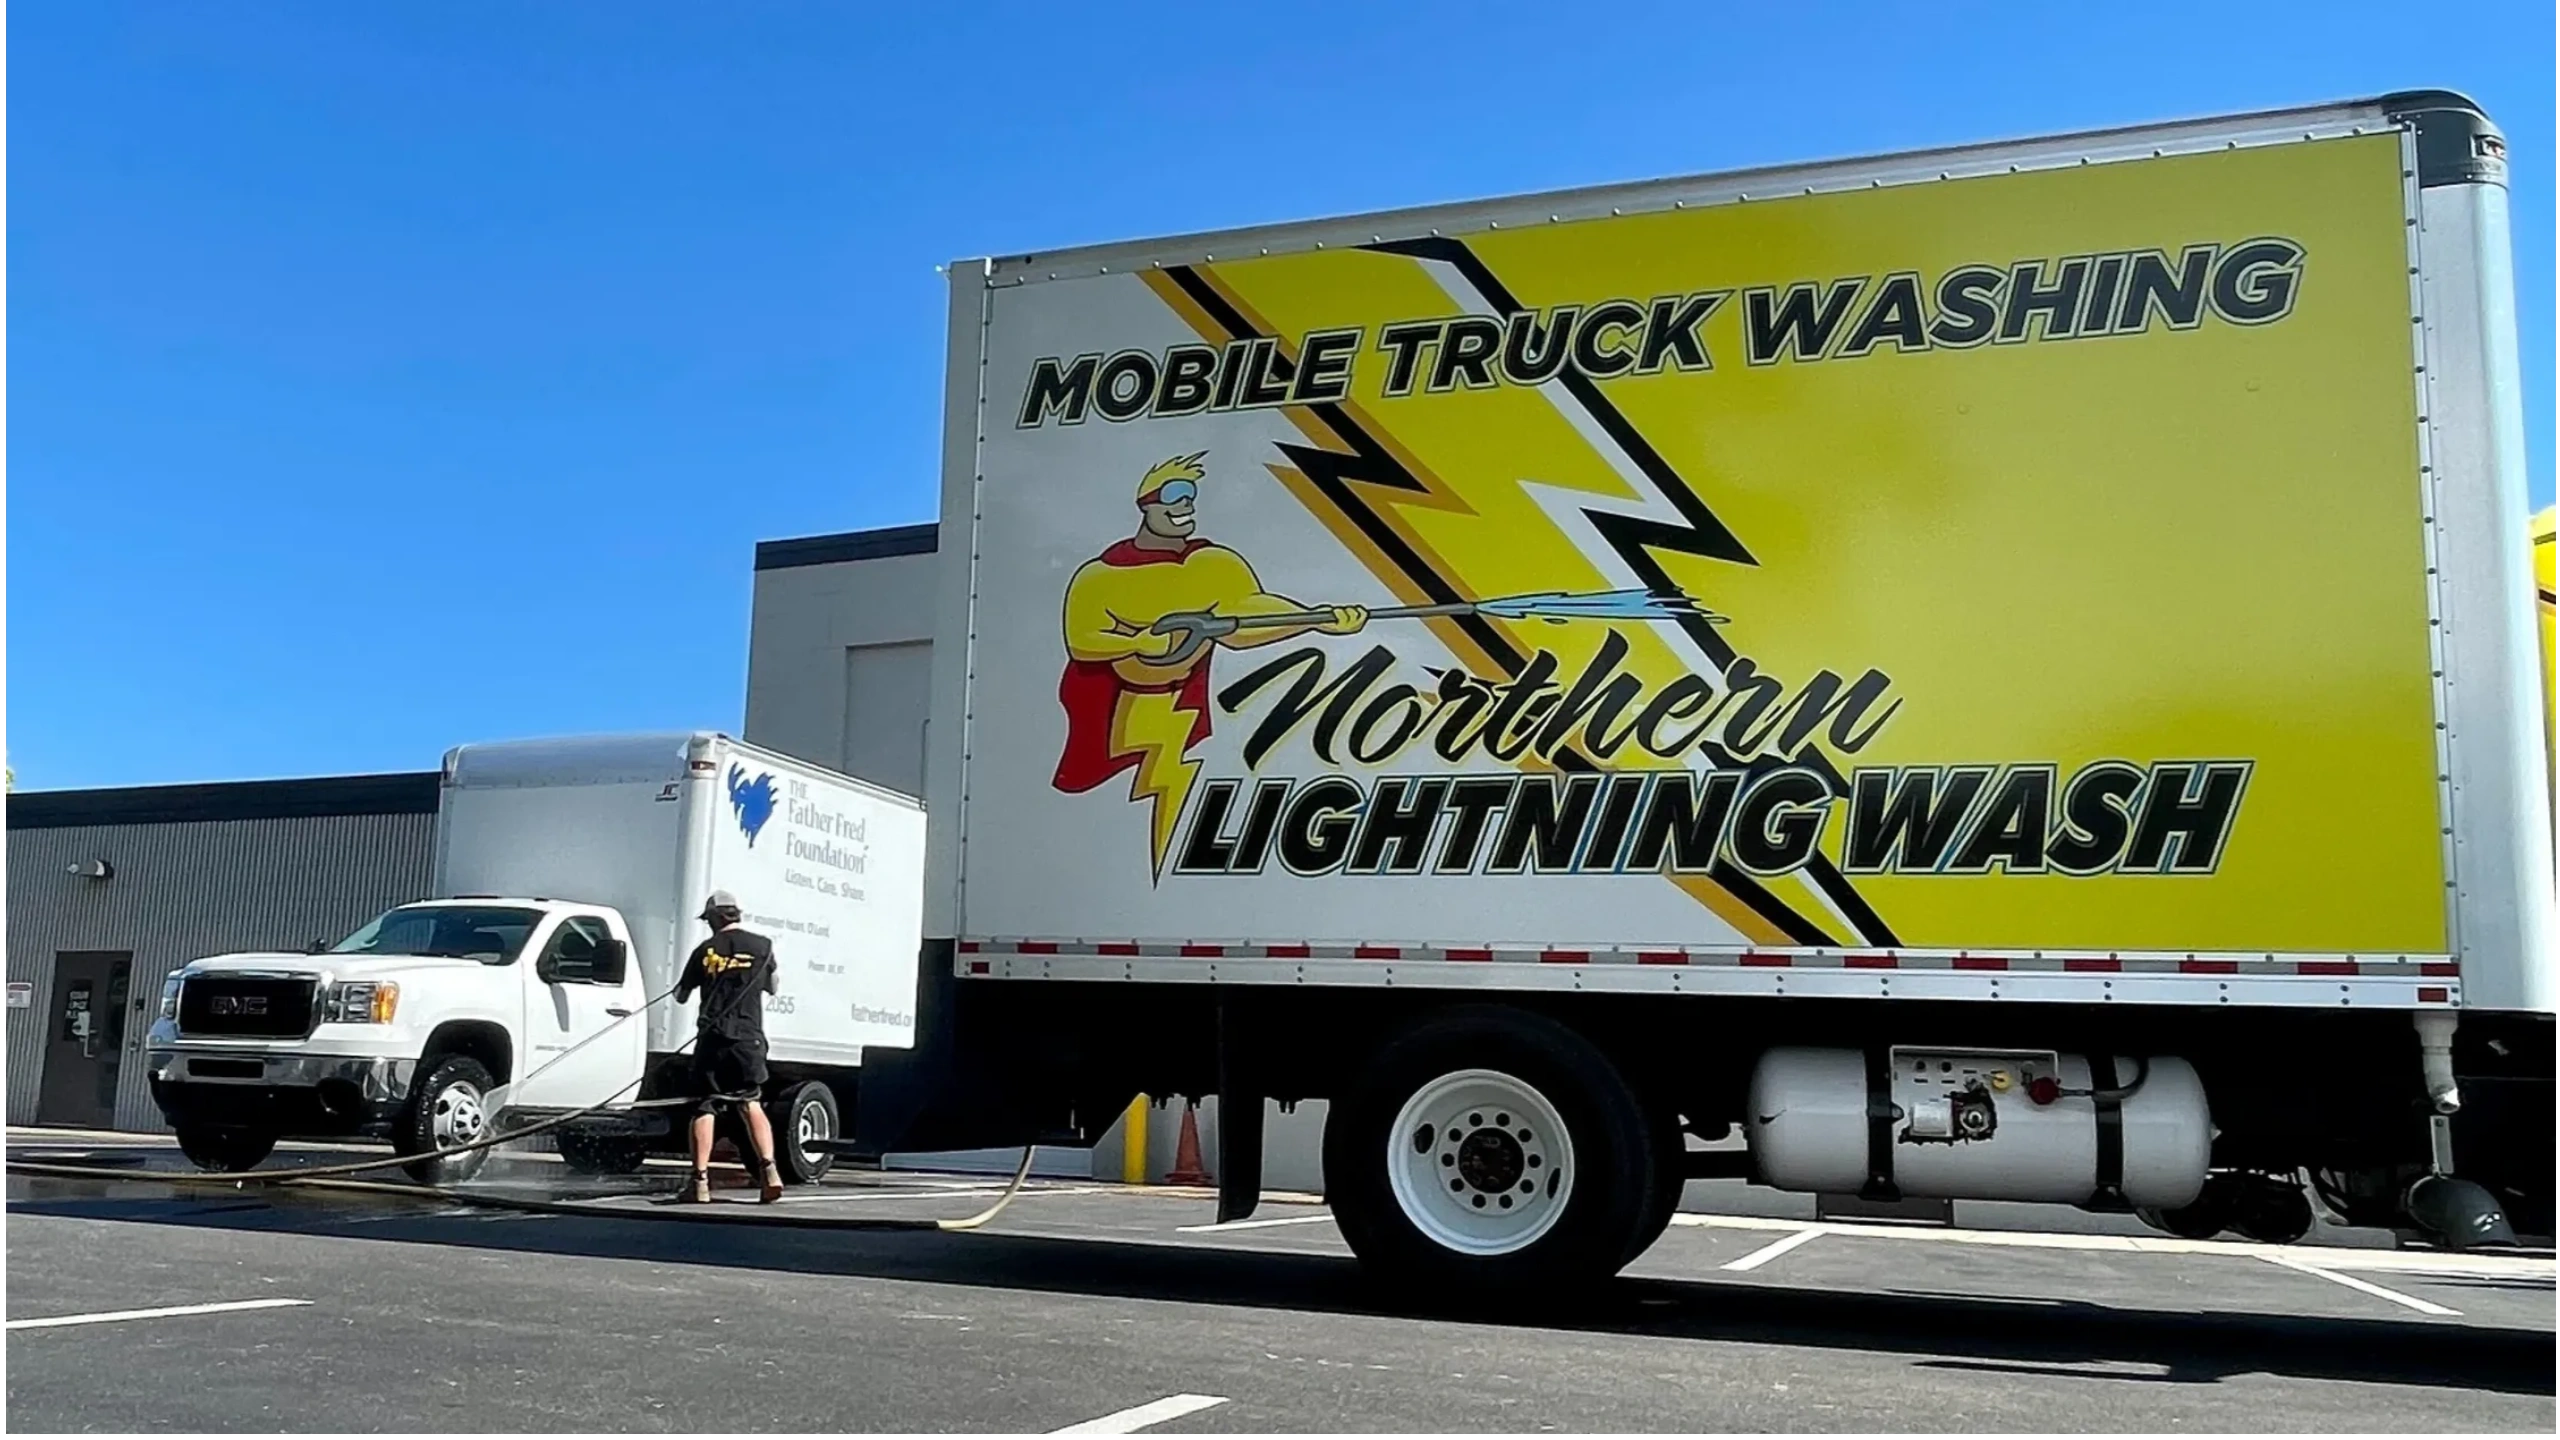 Northern Lightning Wash LLC